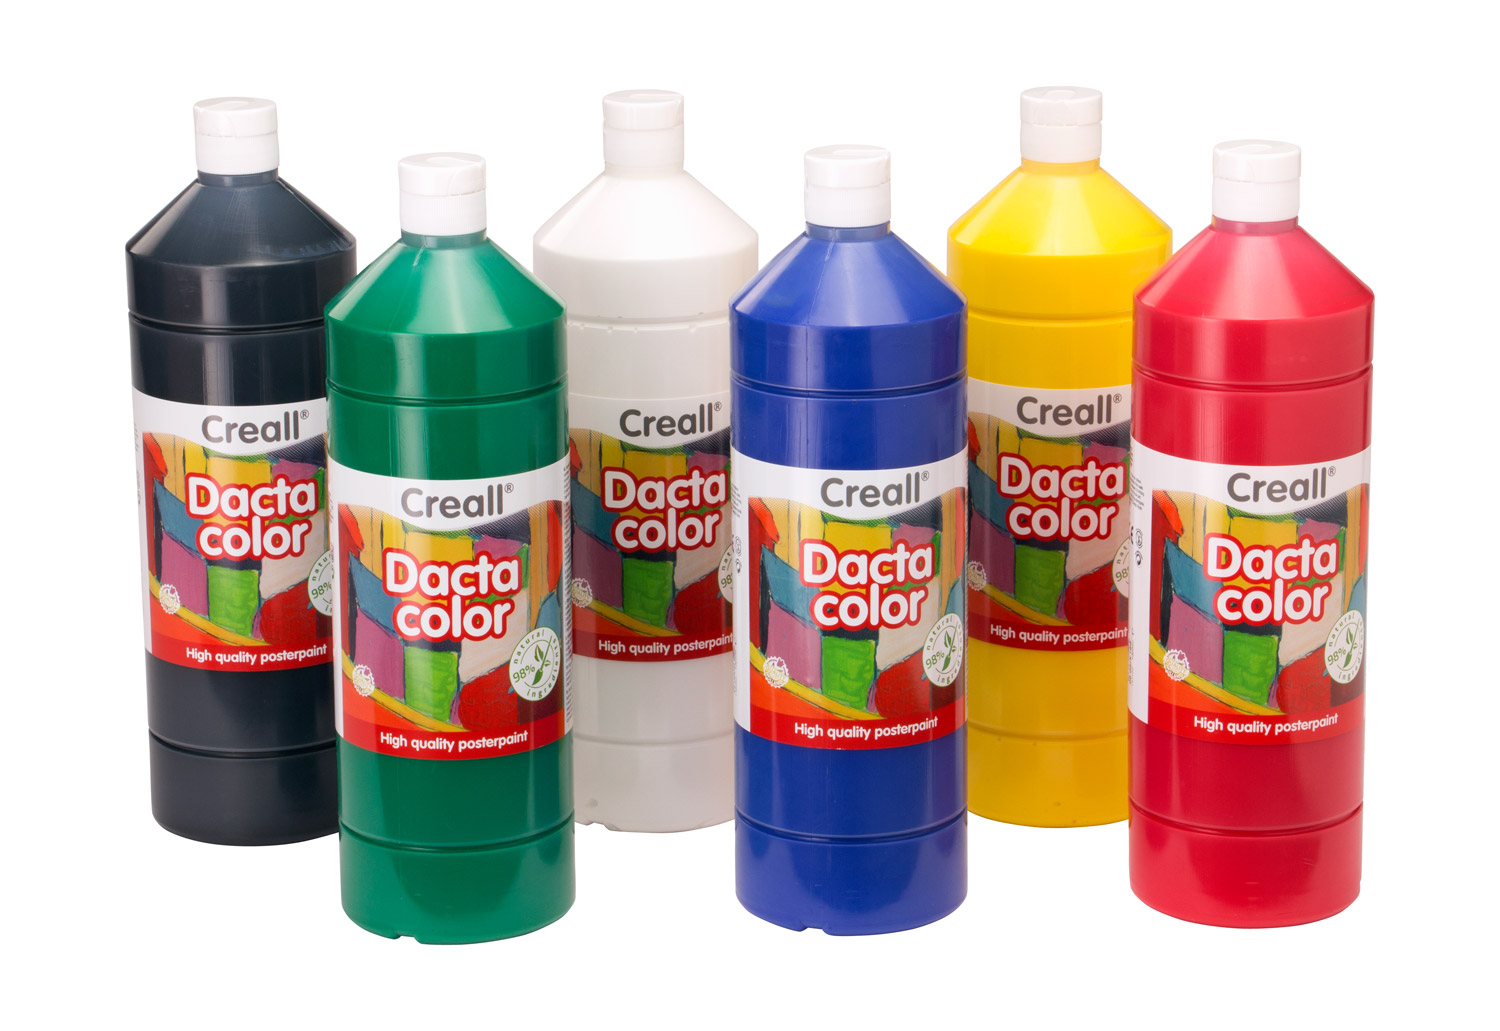 Dactacolor Creall® Dactacolor Set